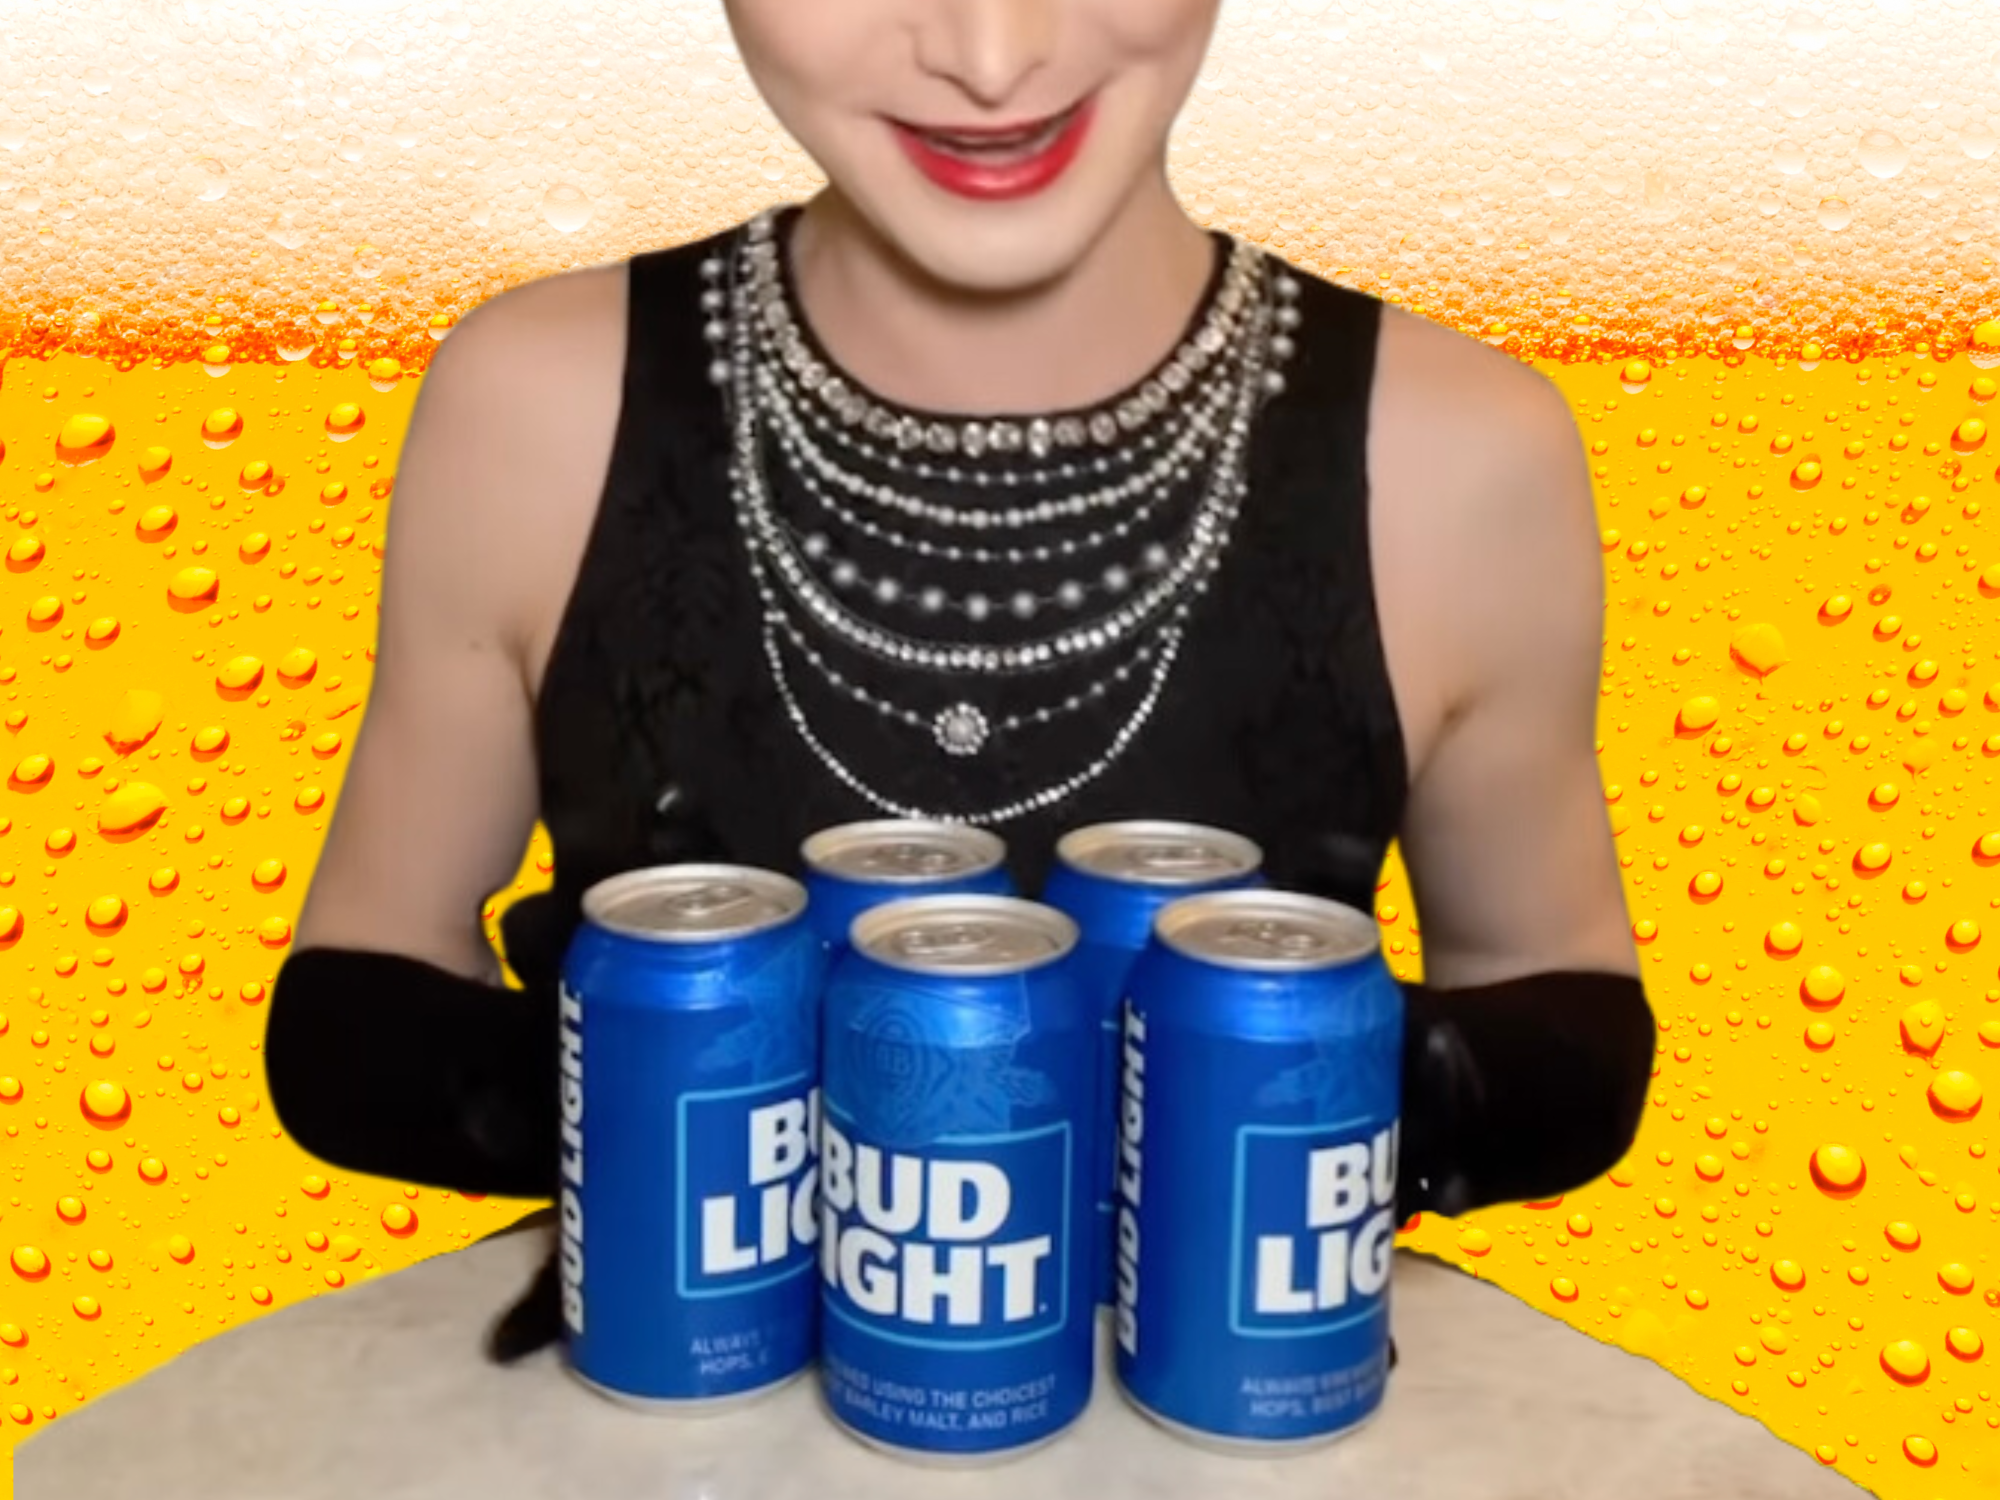 Bud Light Boycott Has Customers Rethinking Anheuser-Busch Beer Brands -  Bloomberg